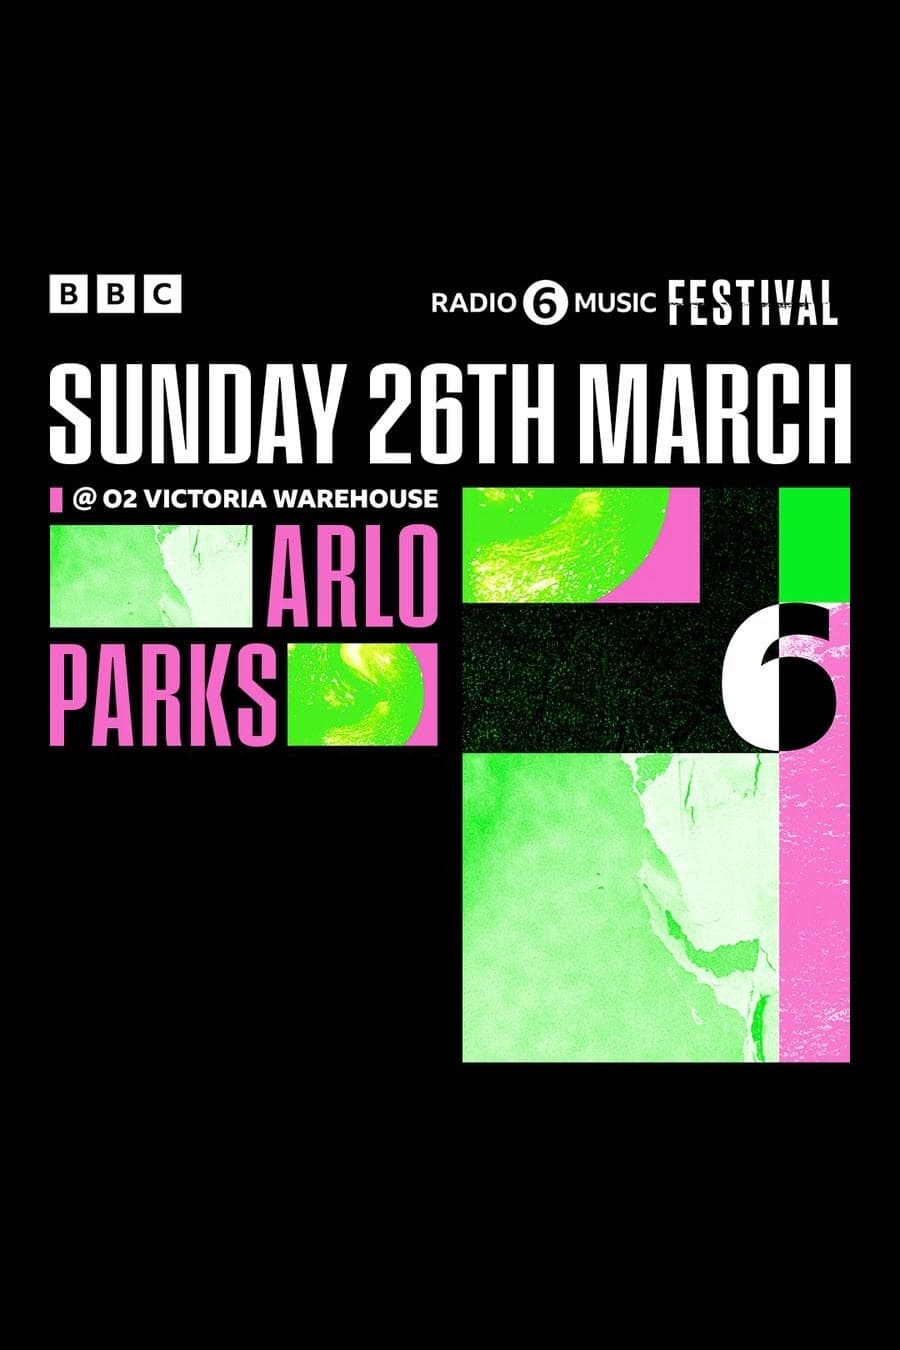 Arlo Parks - 6 Music Festival